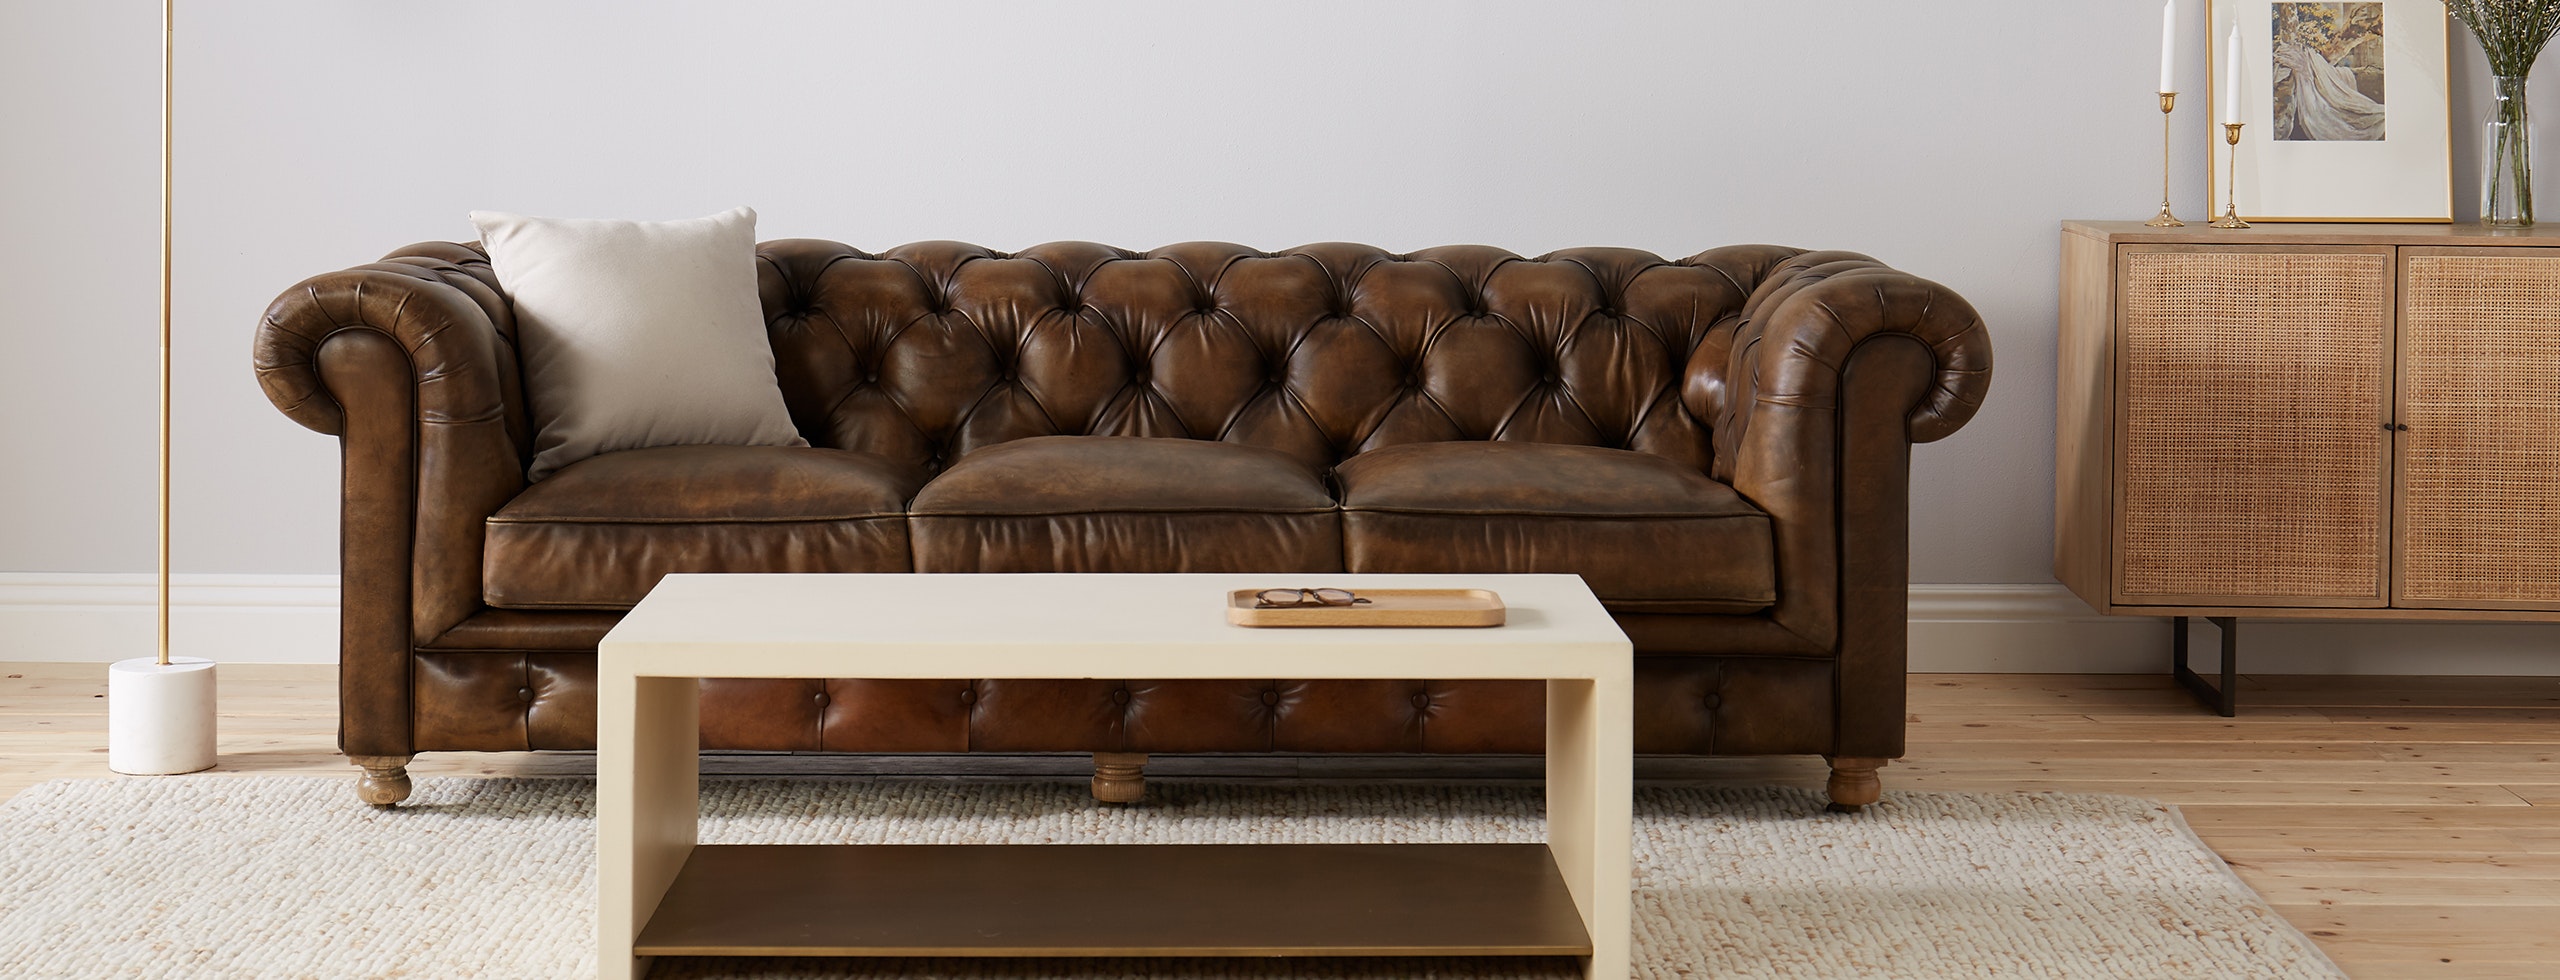 liam leather motion sofa costco